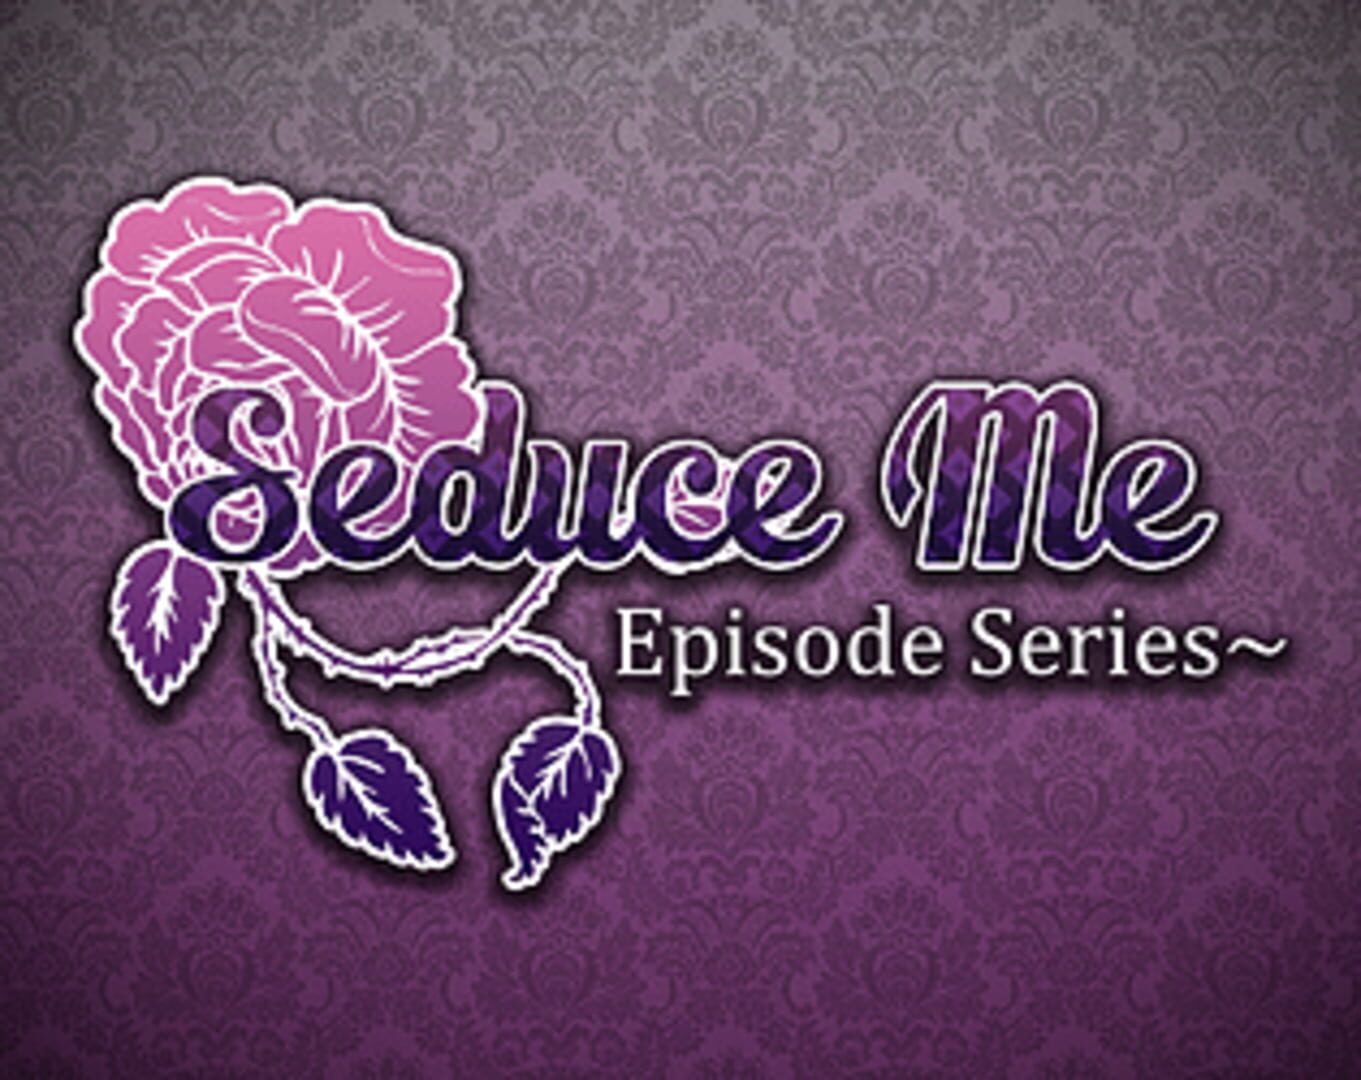 Seduce Me the Otome: Episode Series